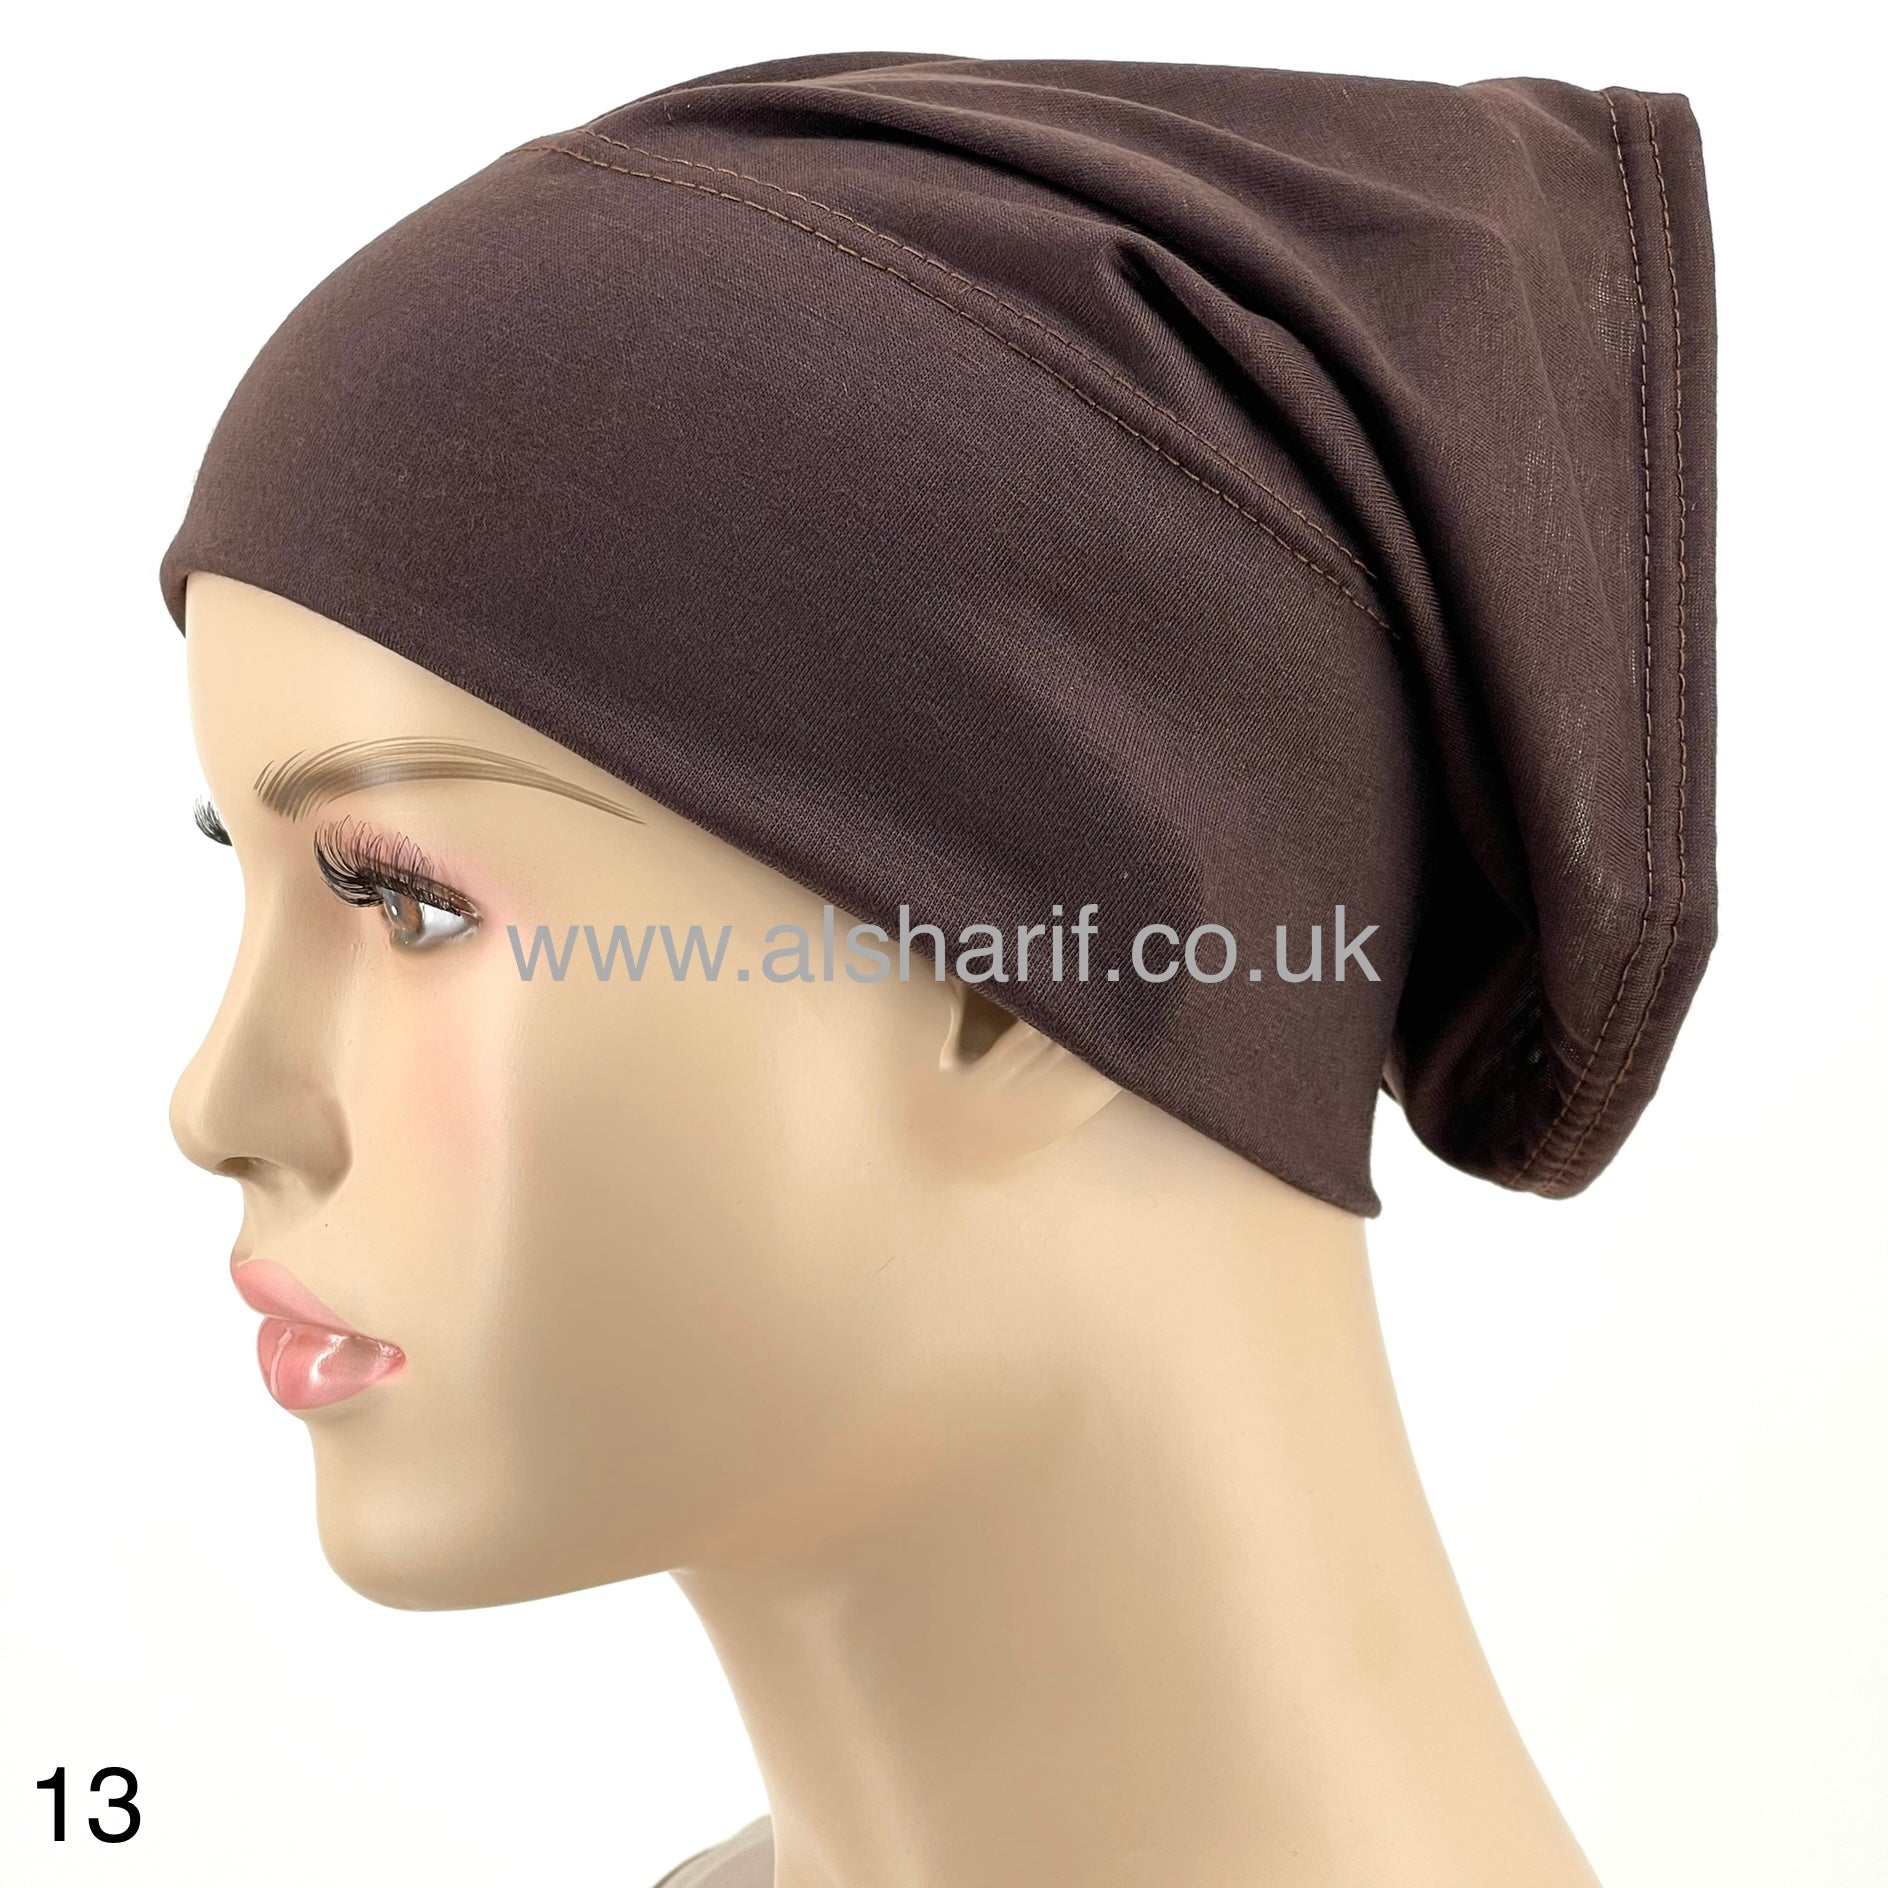 Under Hijab Tube Bonnet Cap #13